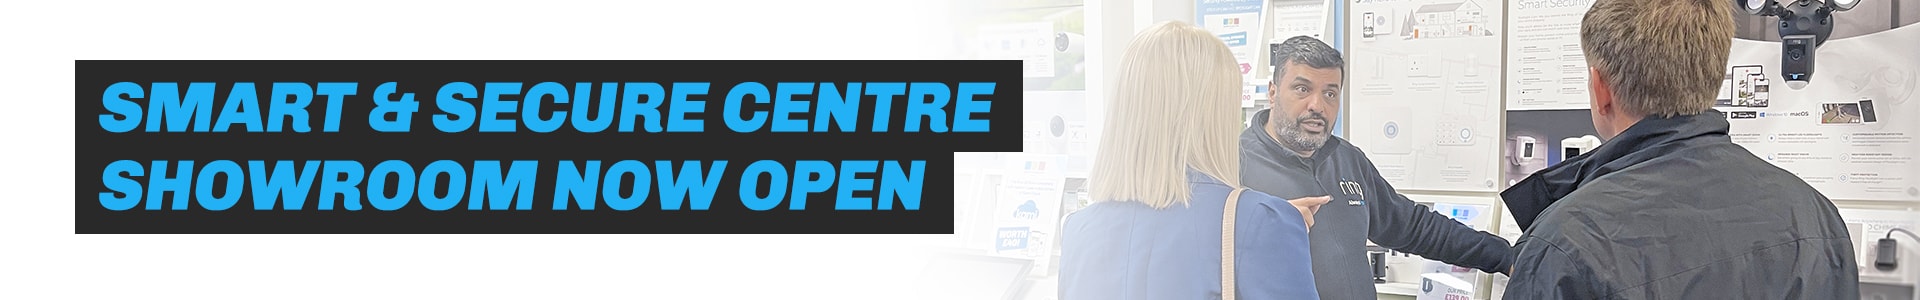 Smart & Secure Centre Showroom Now Open